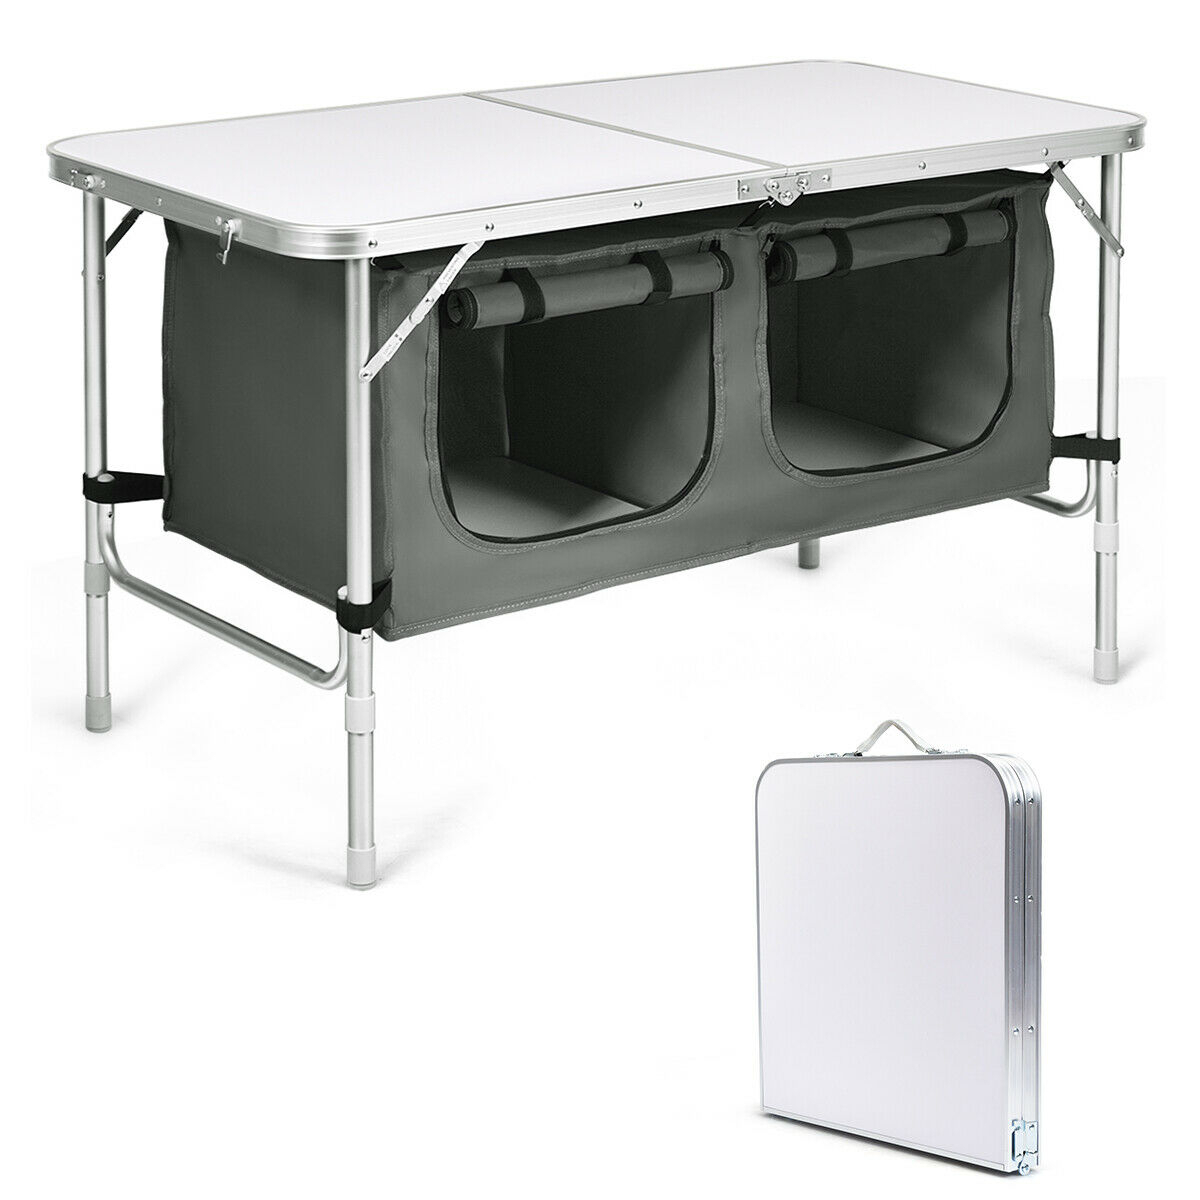 Folding Camping Table Aluminum Height Adjustable W/ Storage Organizer Grey